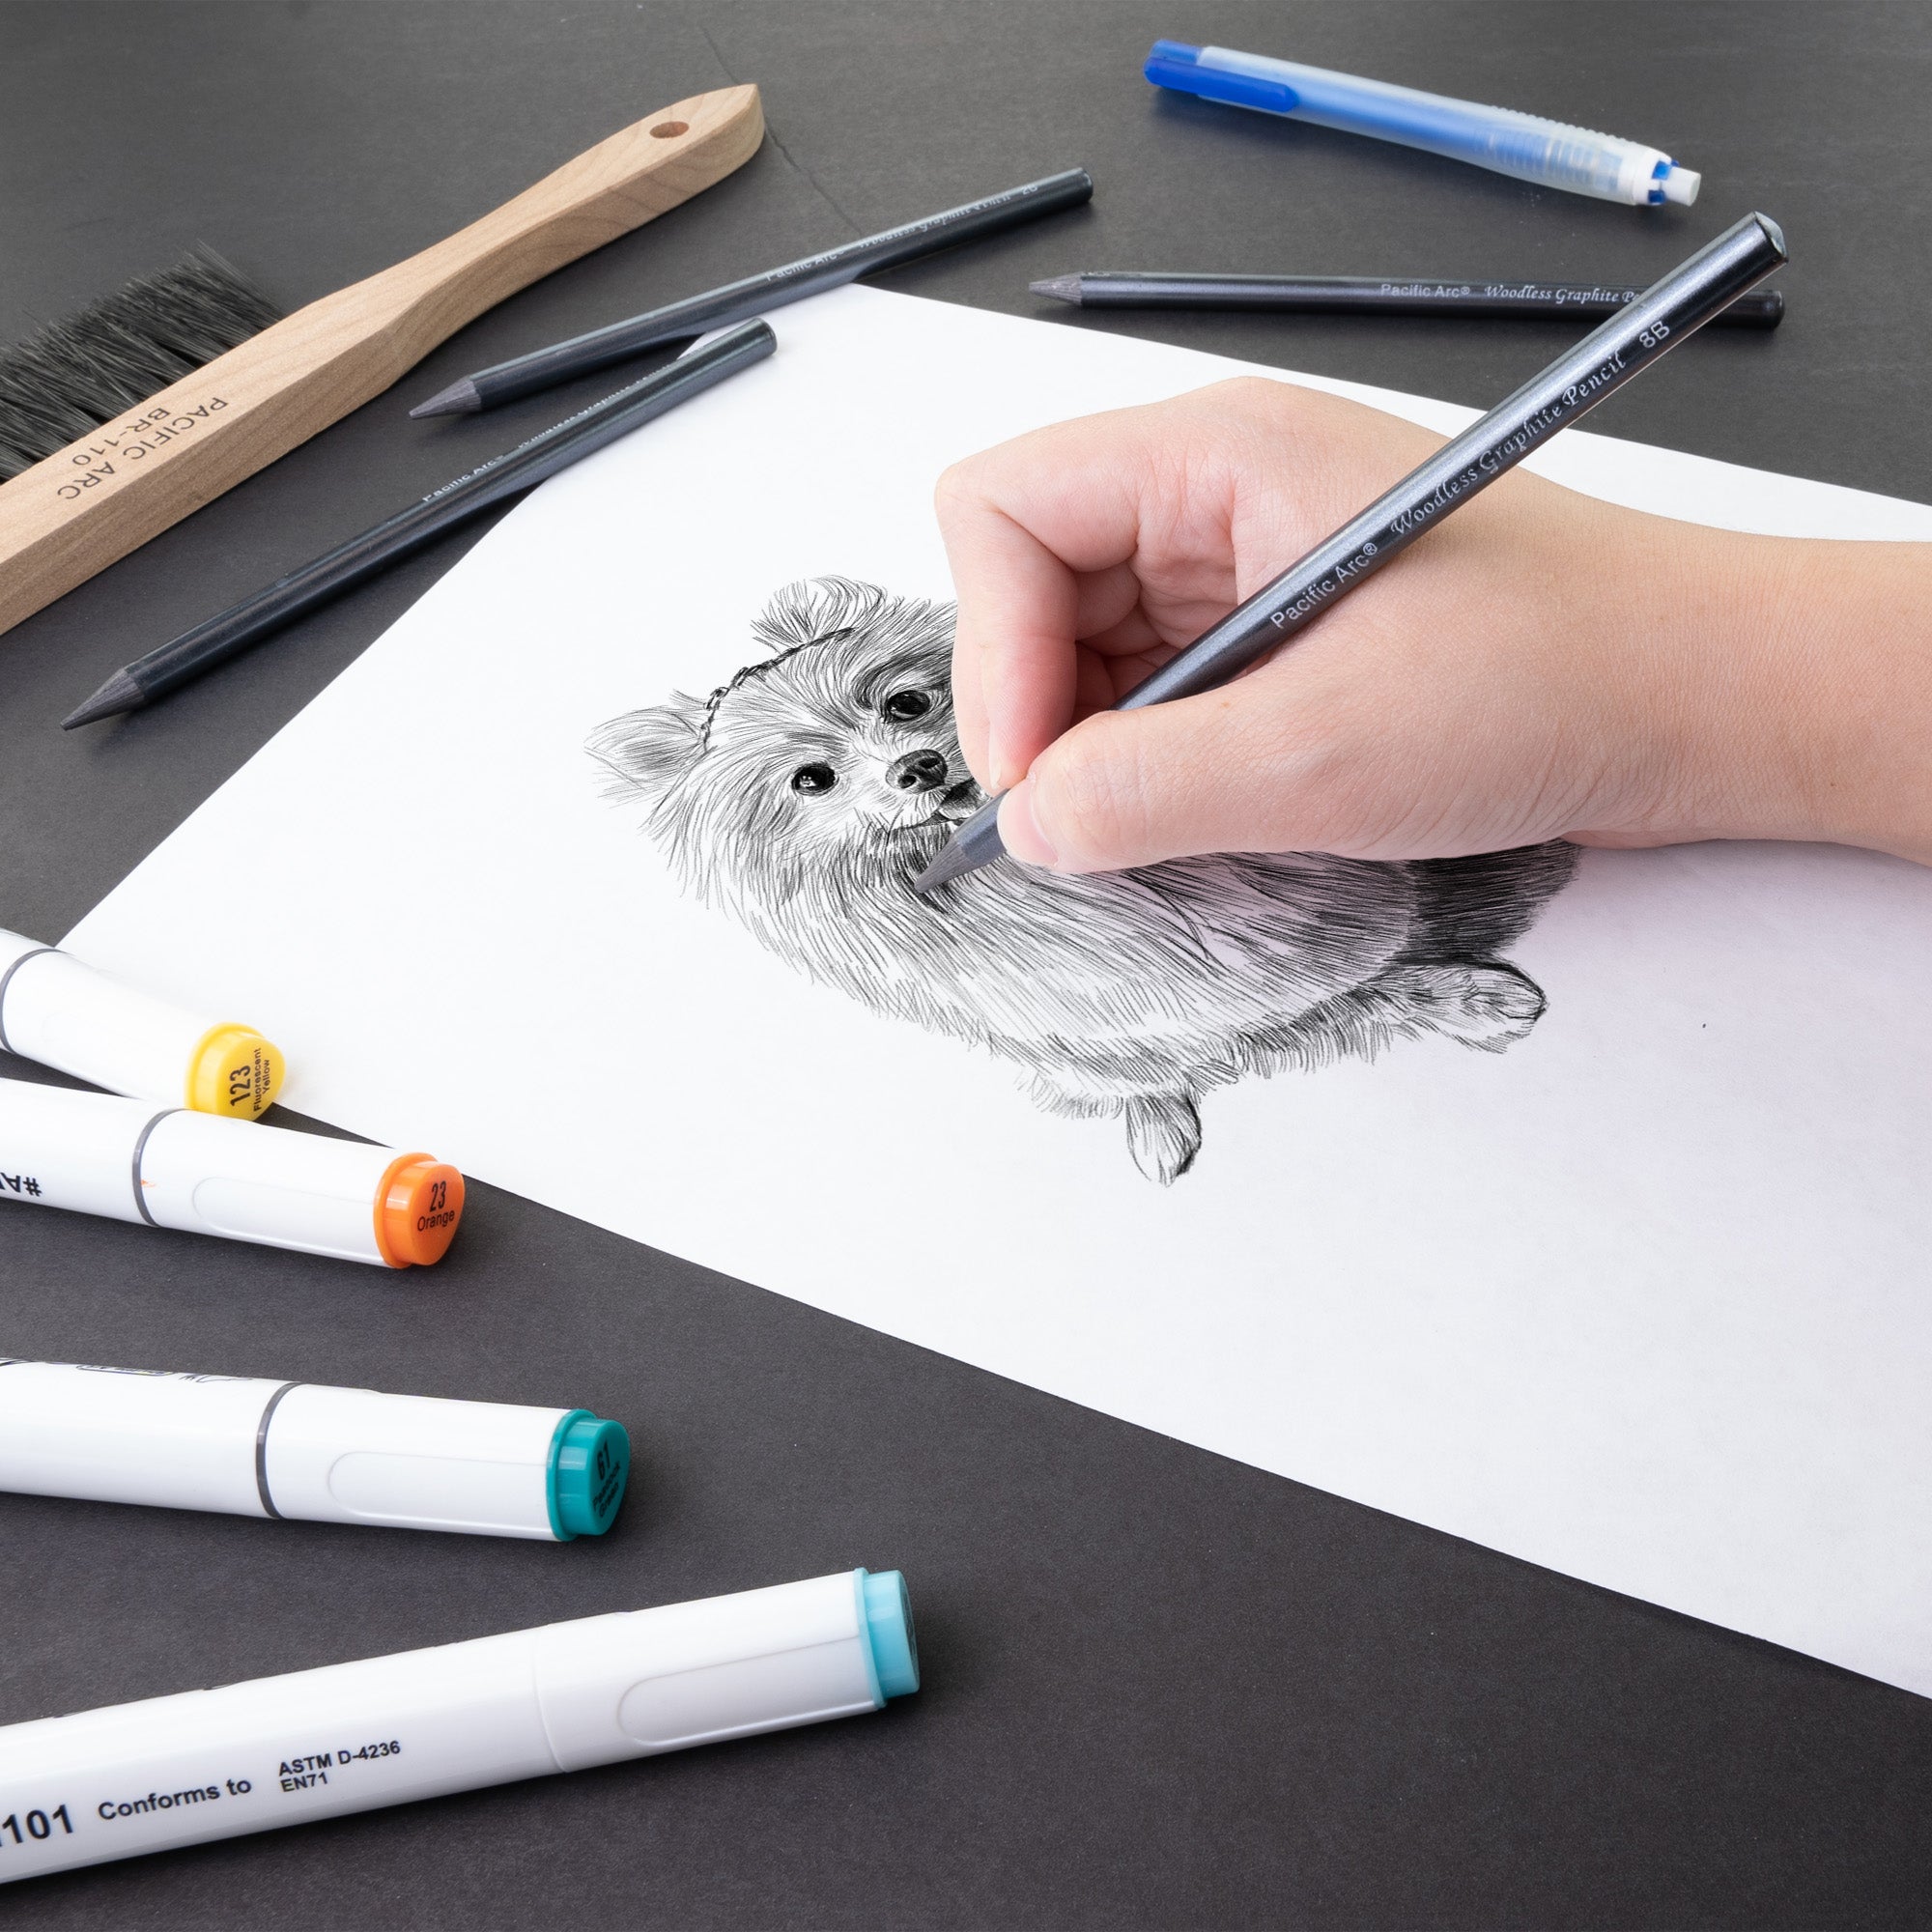  Pacific Arc Premium Graphite Drawing Pencils for